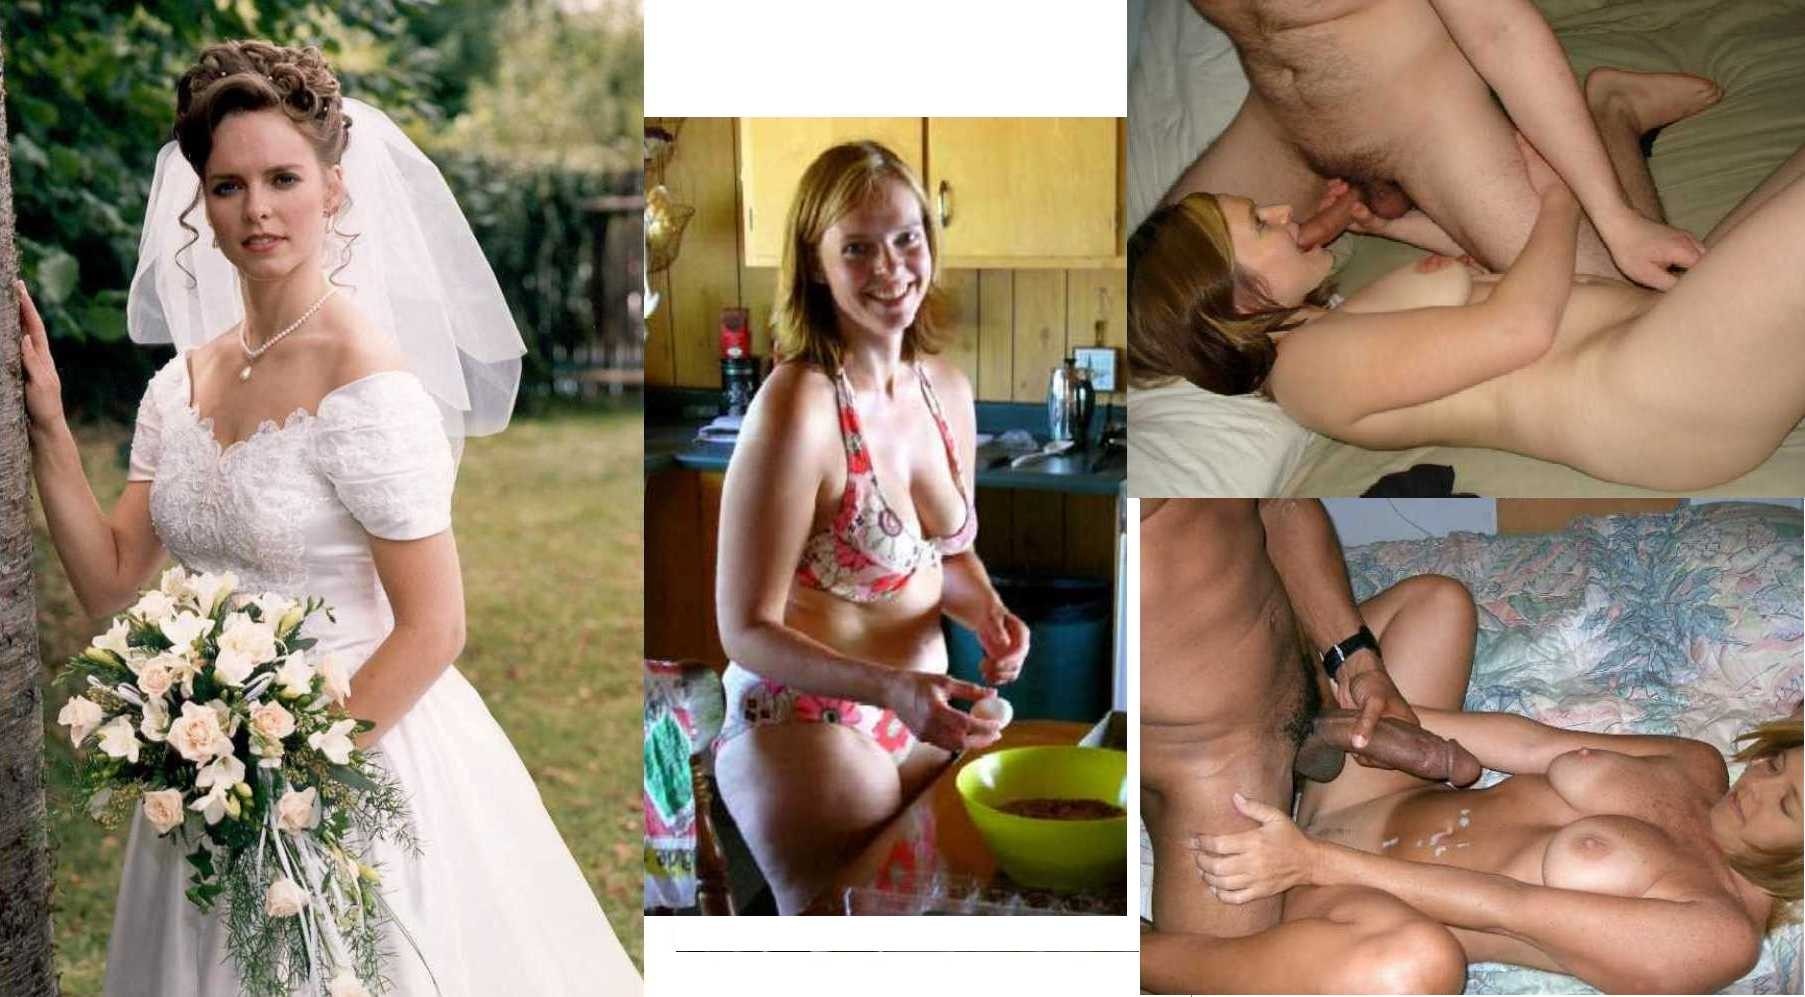 Bride First Night - Real Wedding Night Sex (61 photos) - motherless porn pics